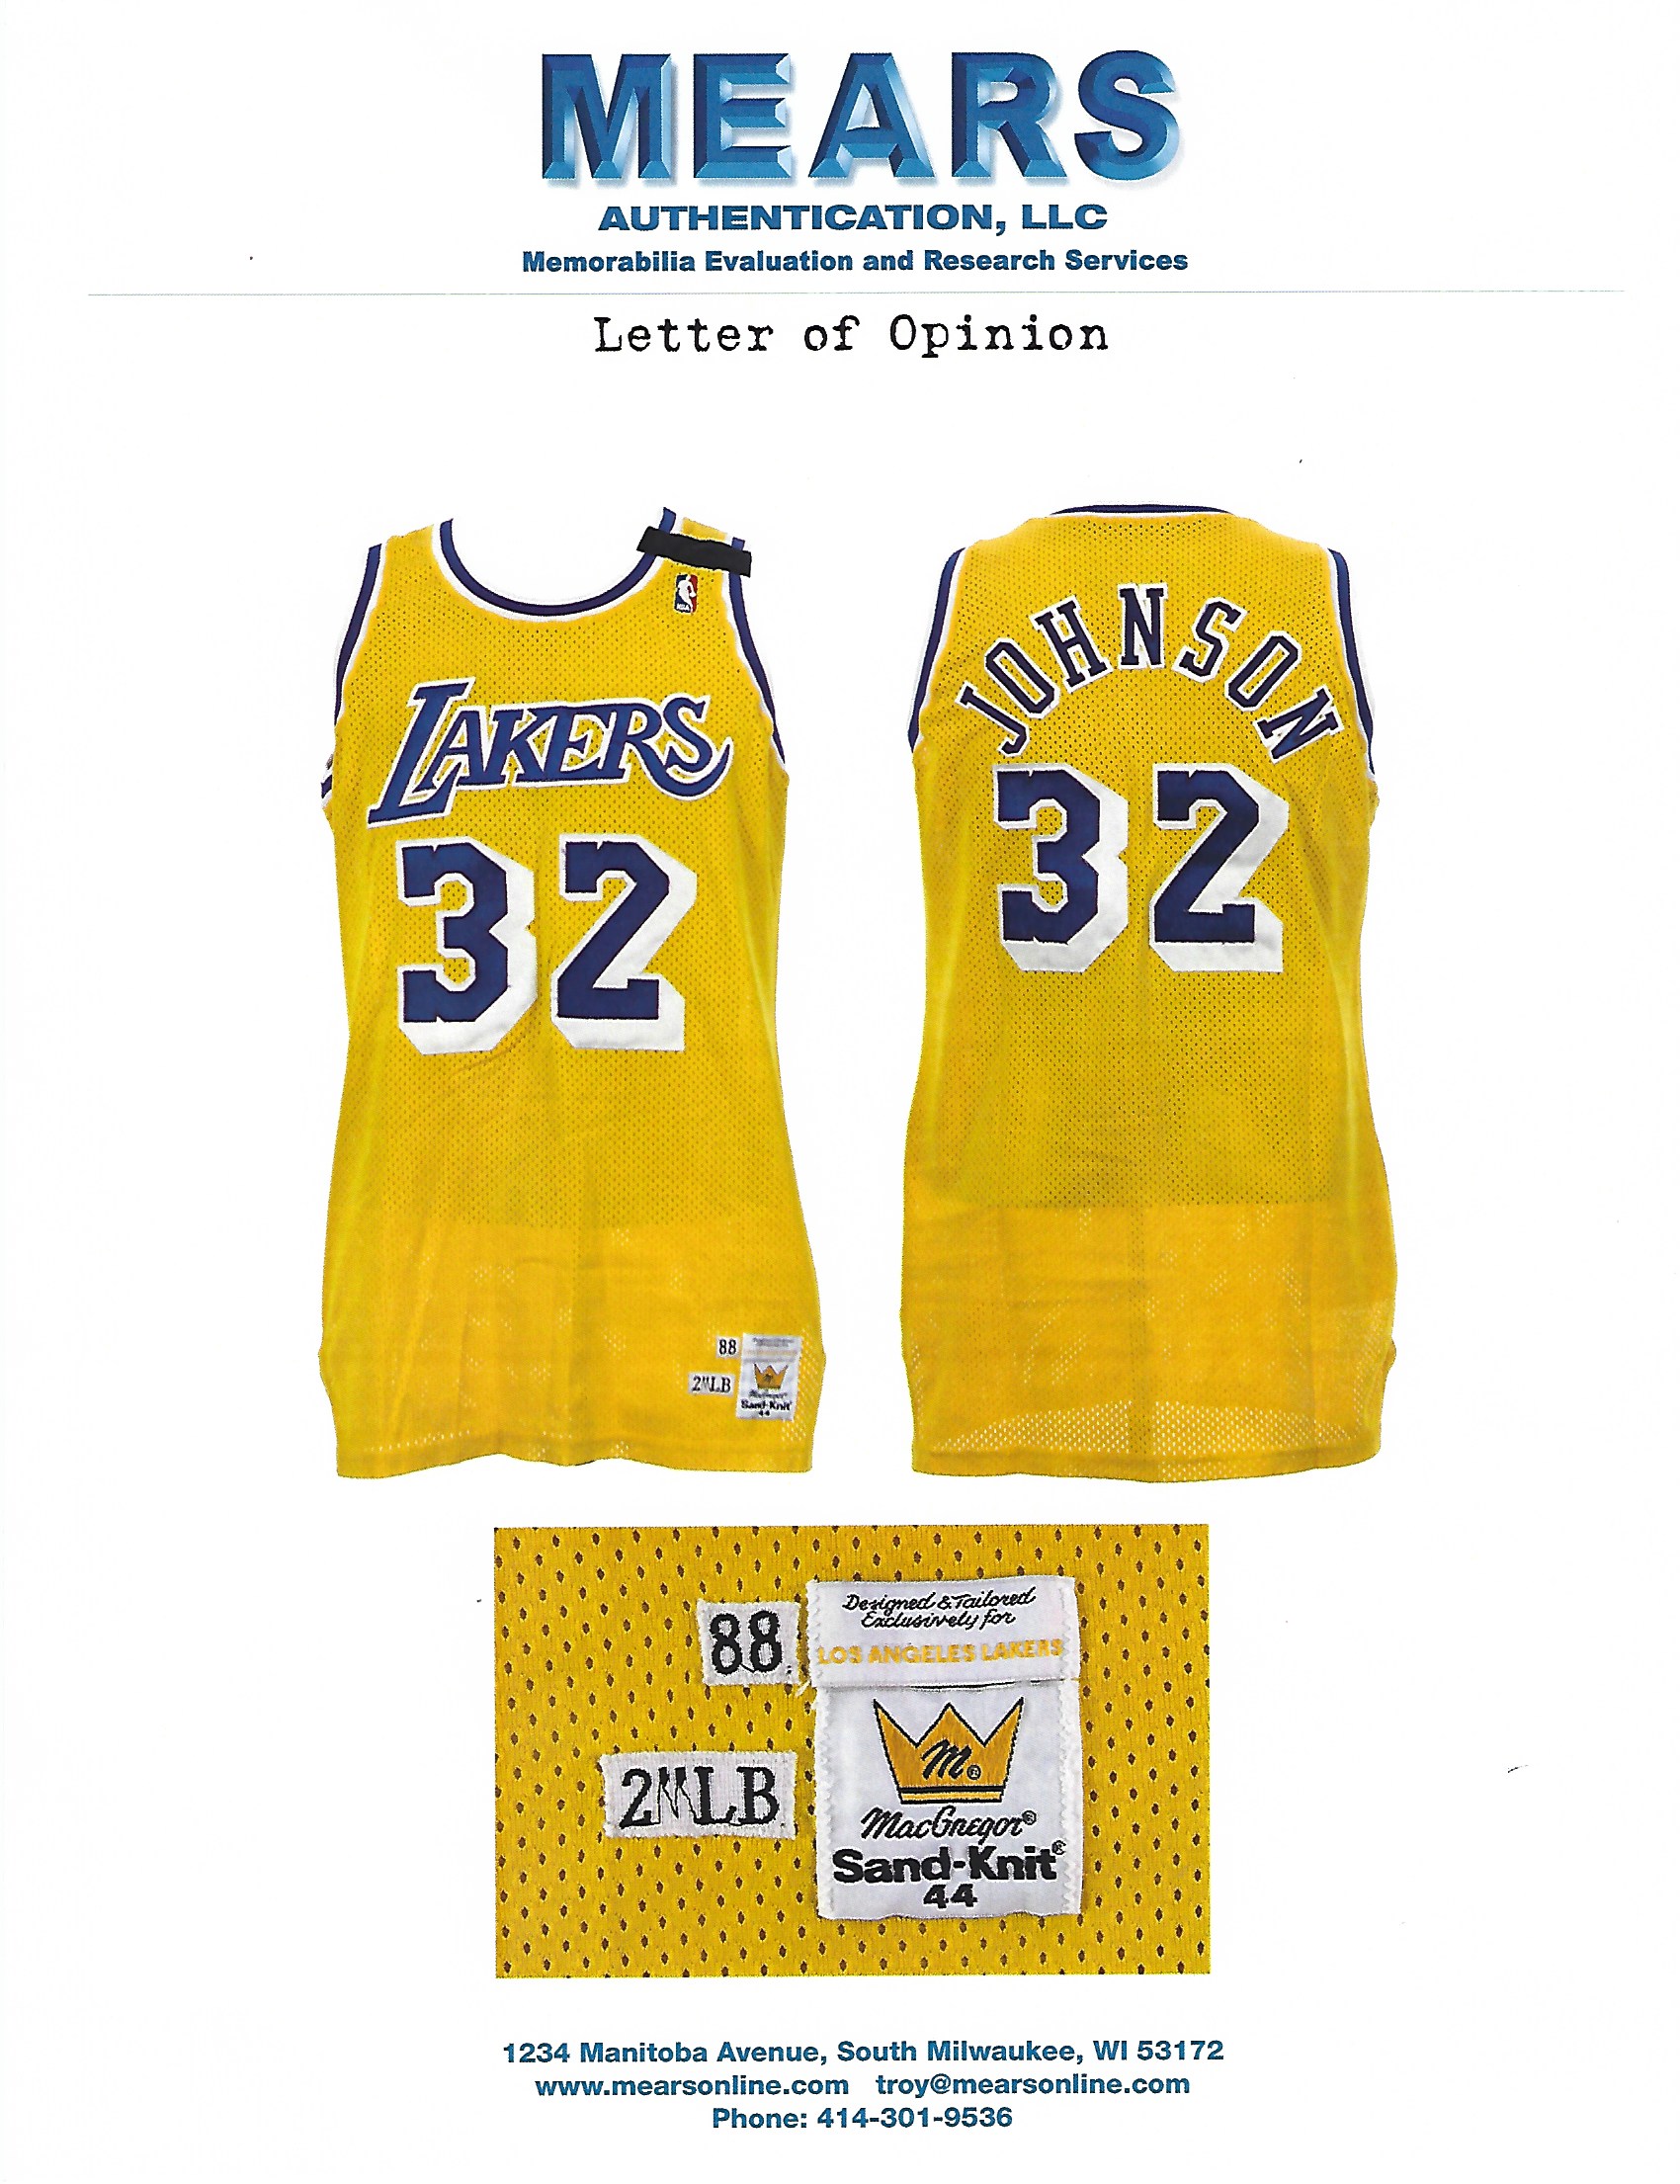 Vintage 1980's Los Angeles Lakers 'Magic Johnson' Stitched Sand-Knit Jersey Sz. M